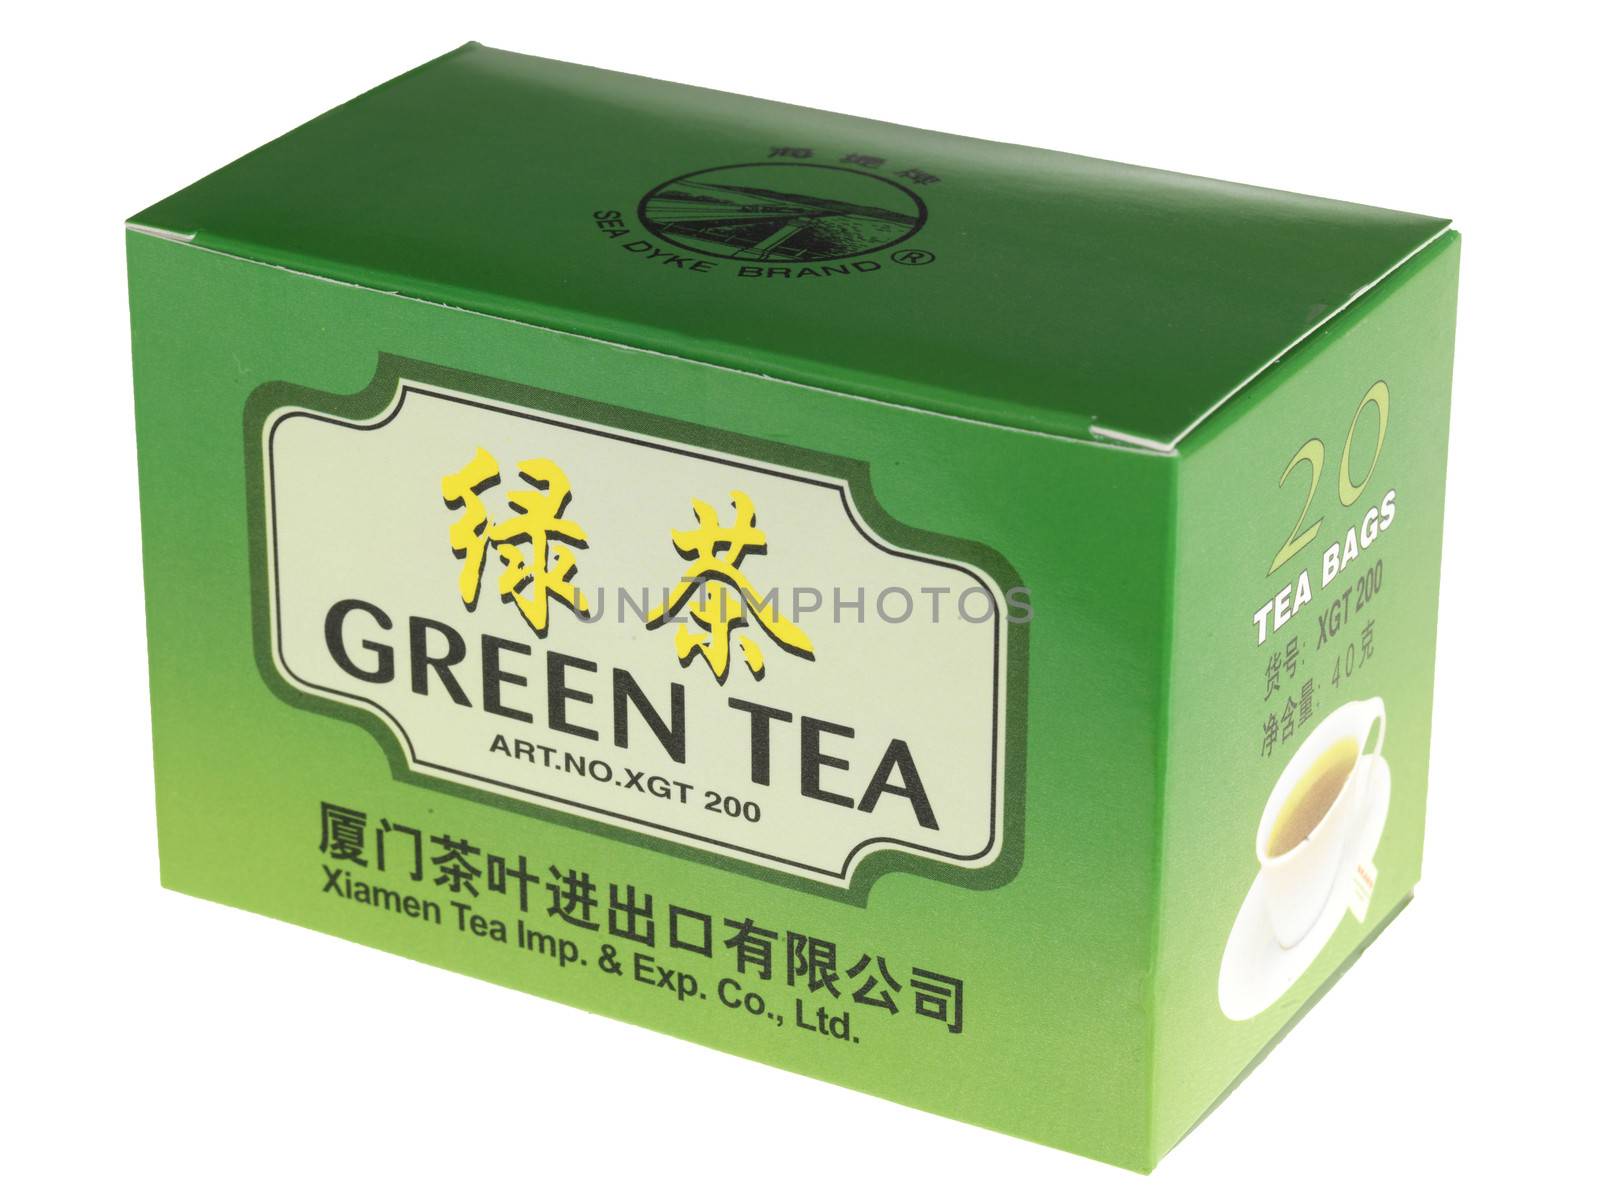 Box of Green Tea Bags by Whiteboxmedia